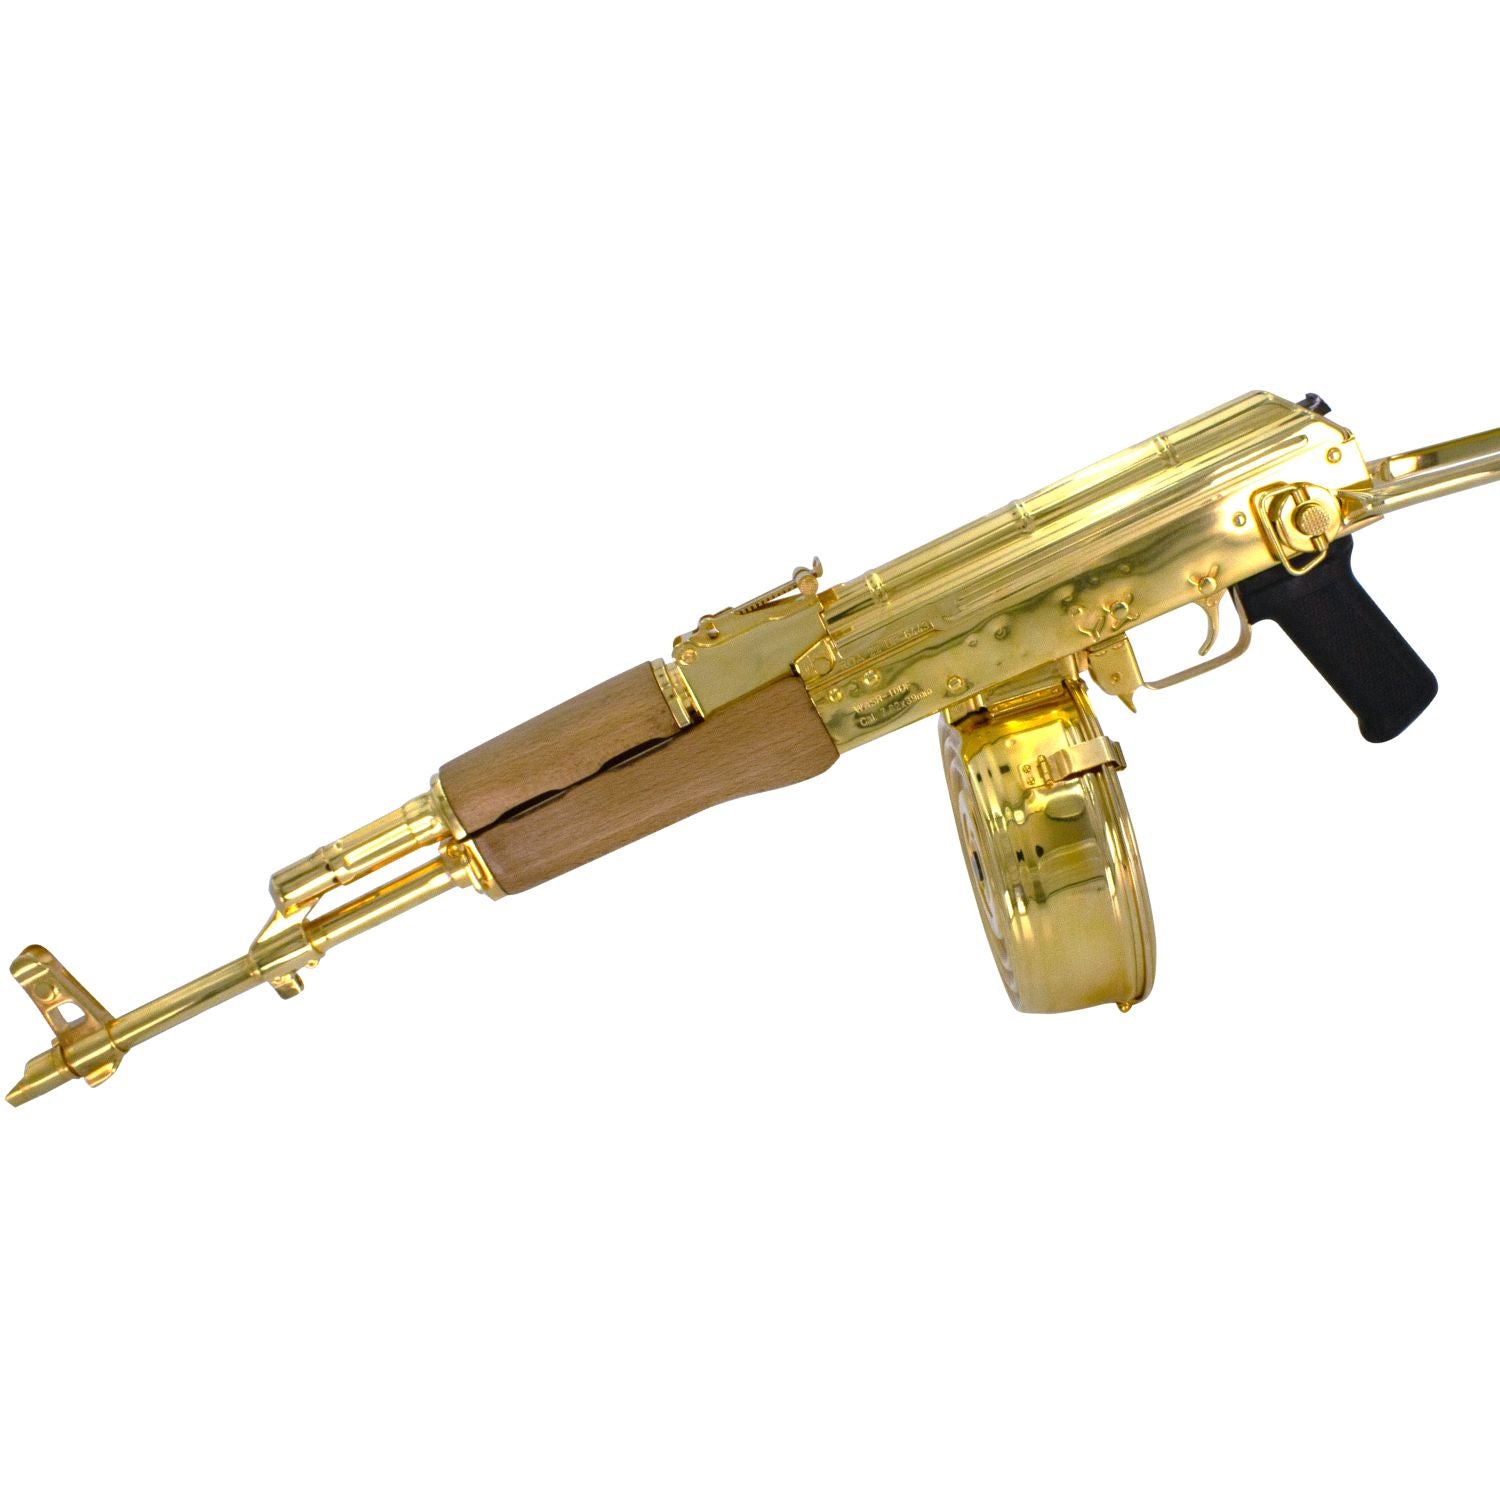 Ak 47 Century Arms Underfolder, 7.62x39mm, 24 karat Gold Plated W/ 24k Gold Plated Drum Magazine  SKU: 6838915727462,Gold AK 47, Gold Gun, Gold Firearm